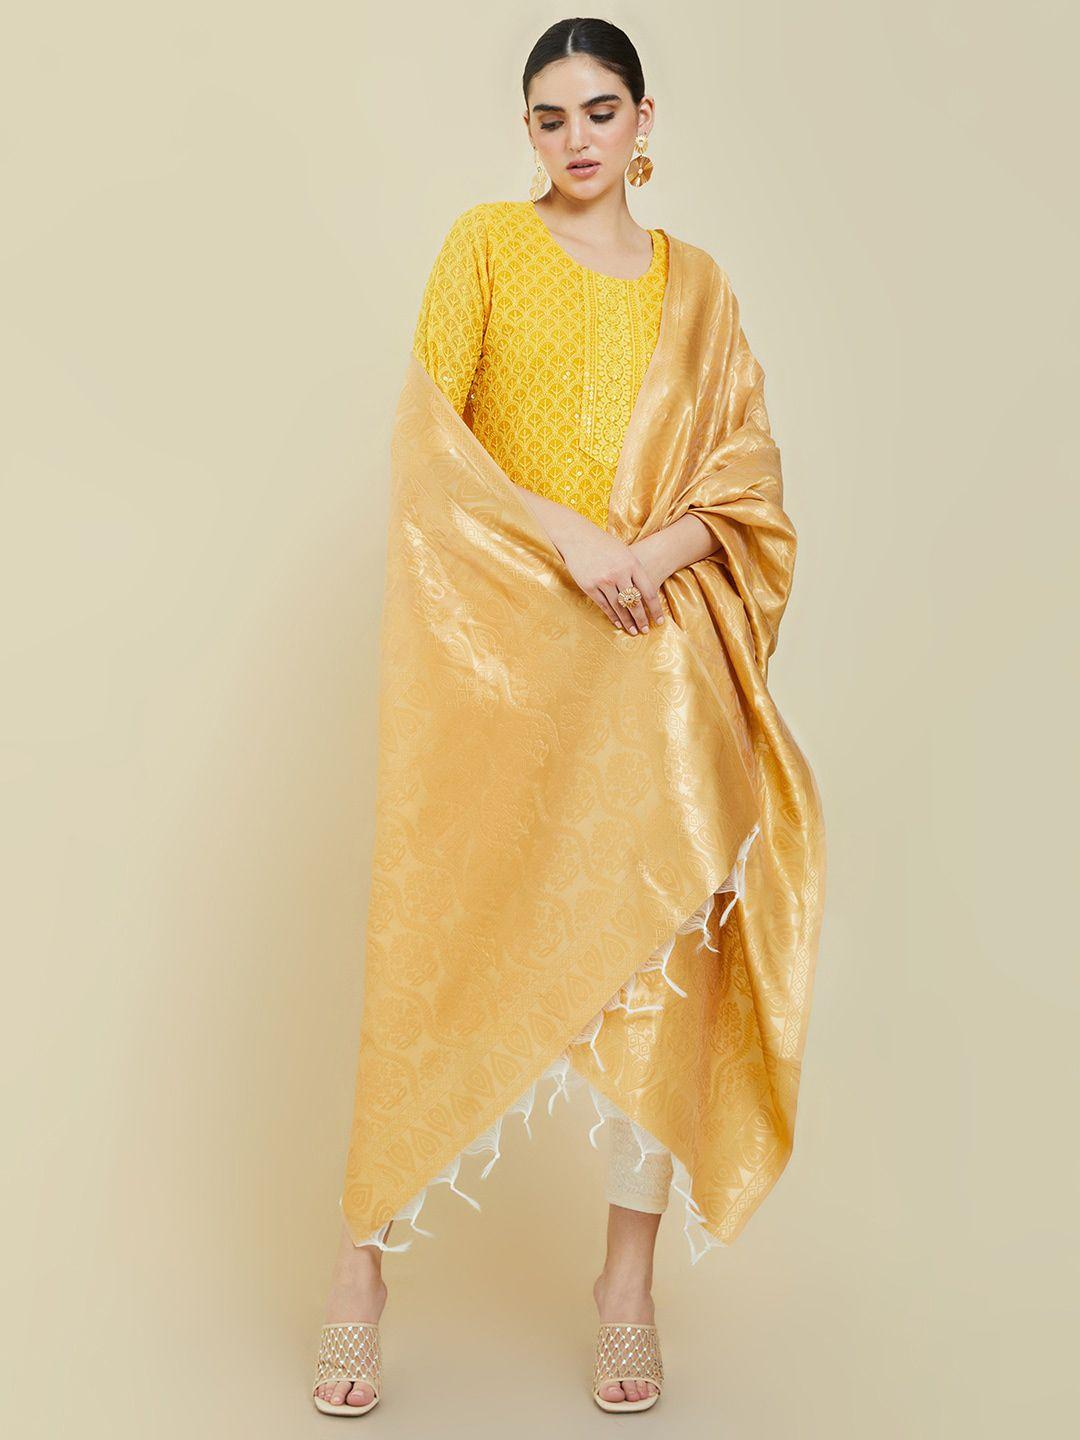 soch gold-toned ethnic motifs woven design dupatta with zari